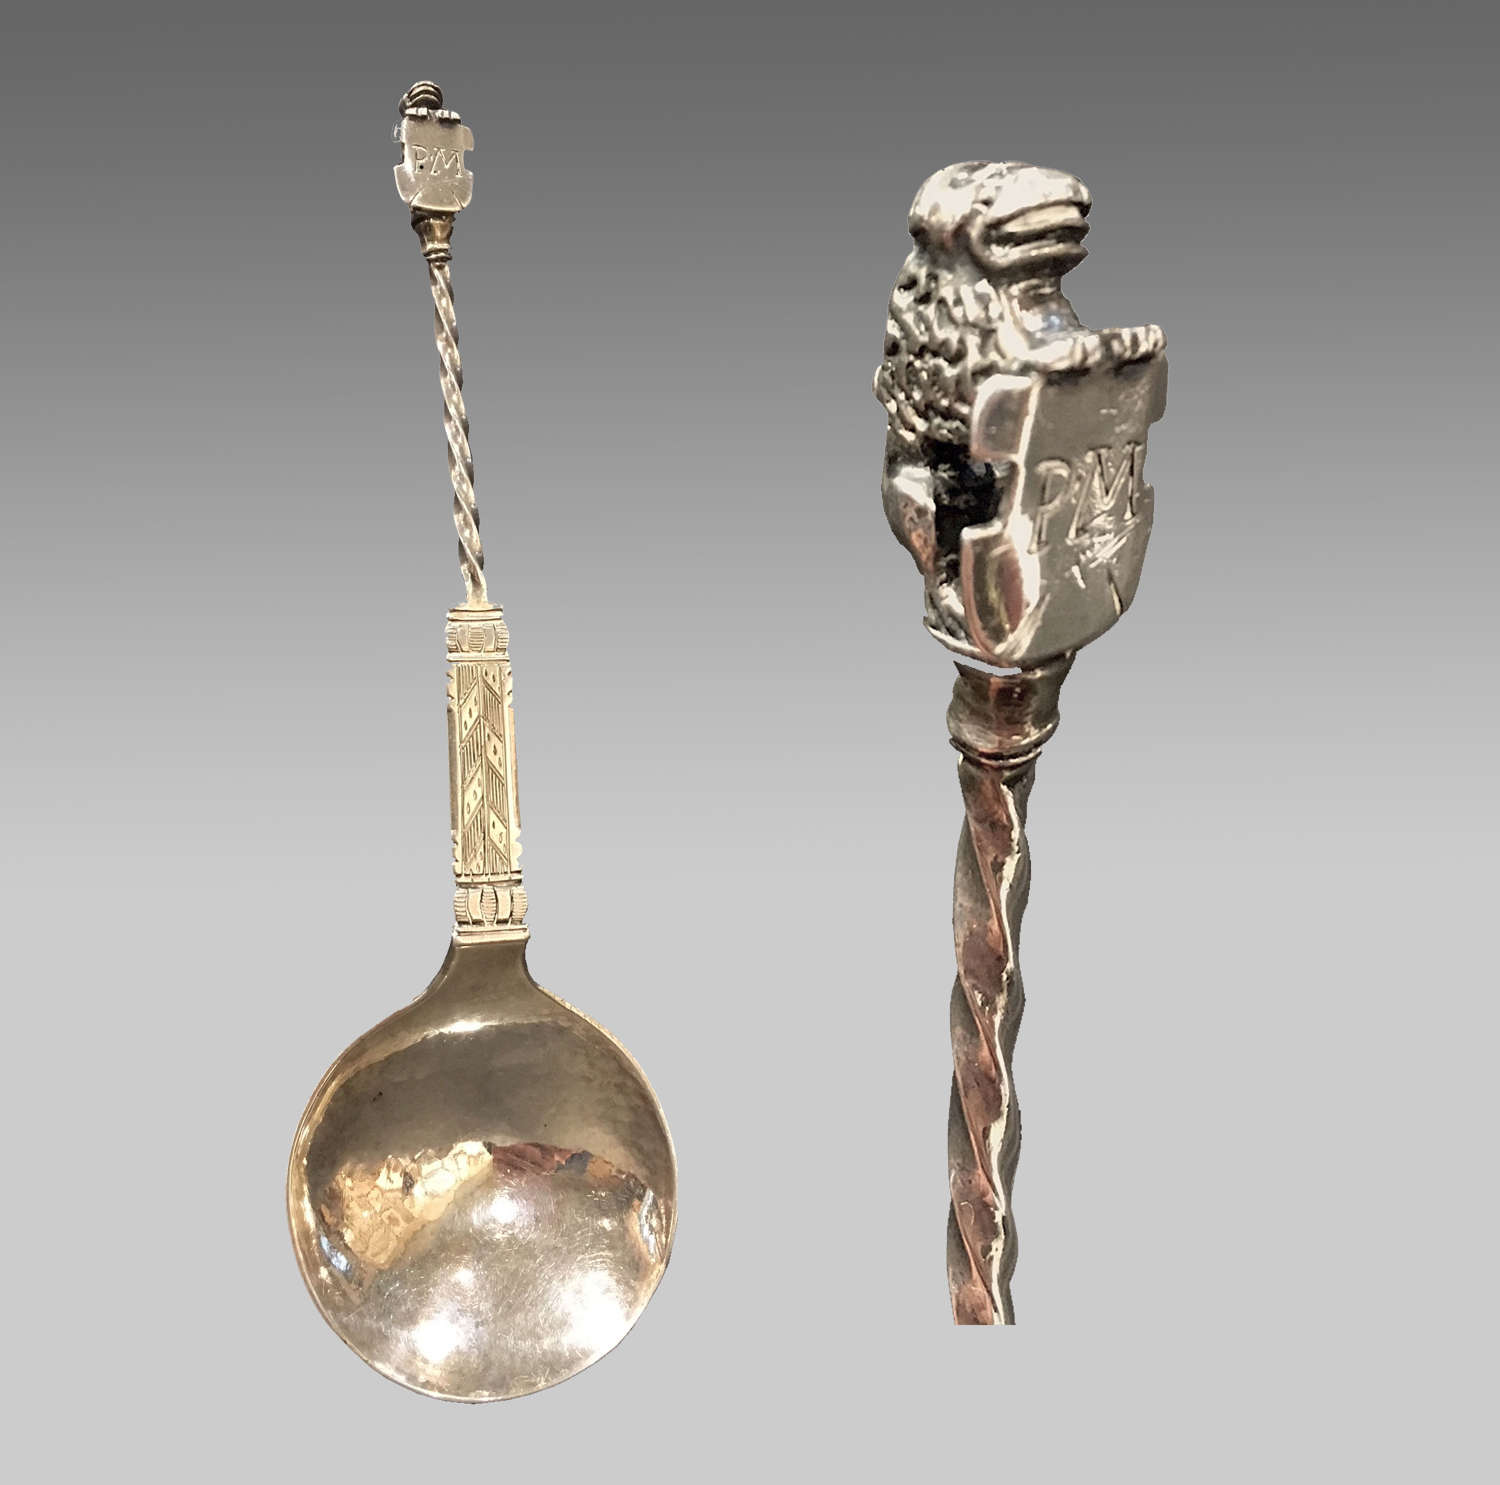 16th century German, heraldic knop silver spoon